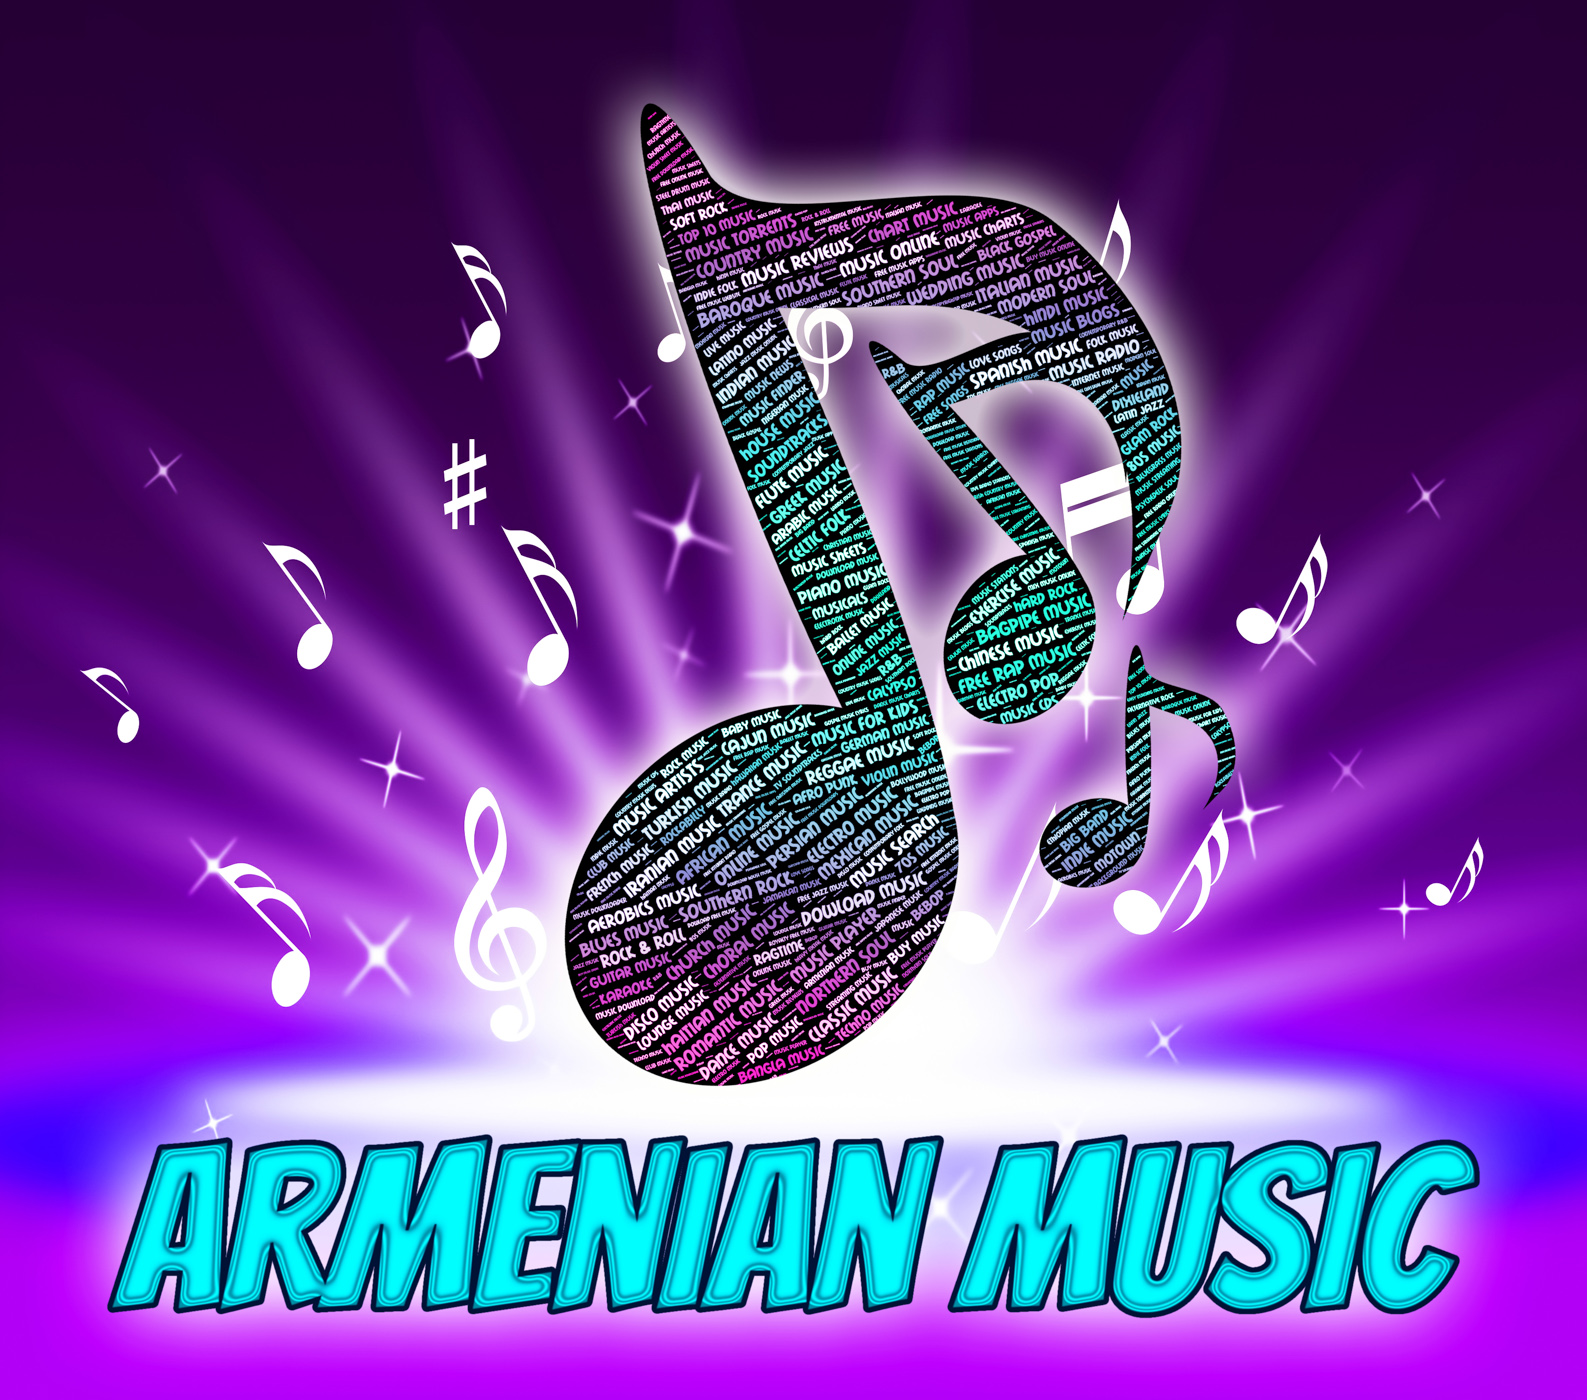 Armenian music represents djivan gasparyan and folk photo